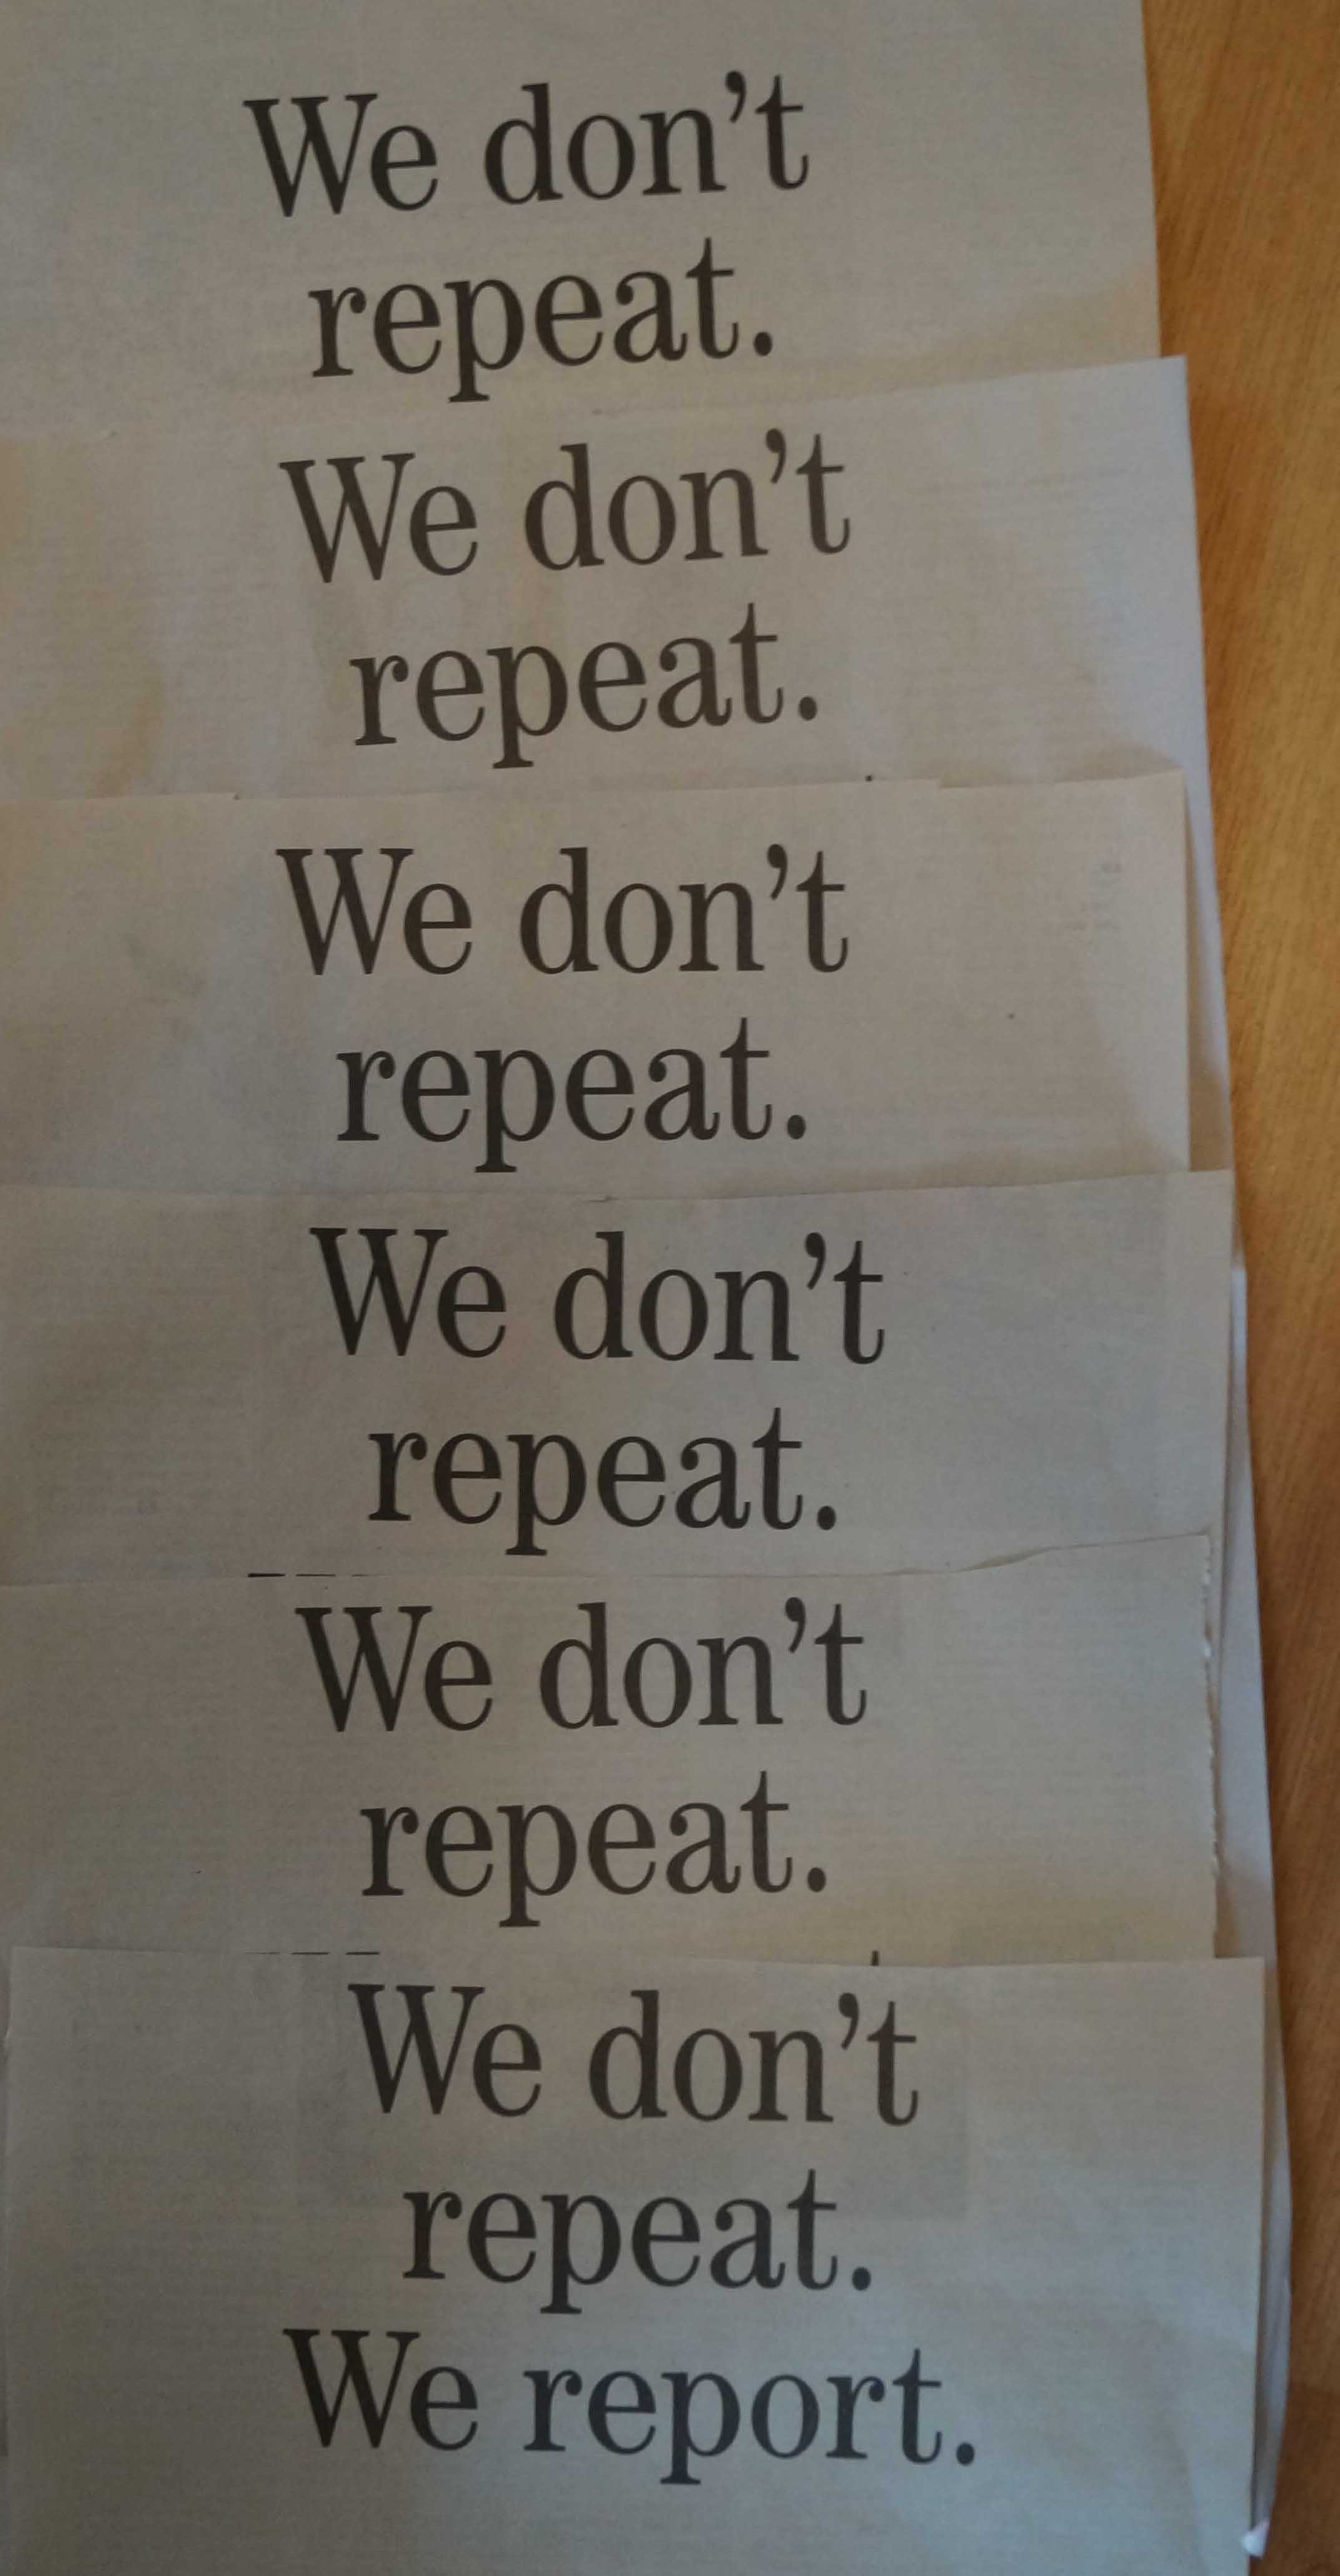 Toronto Star: We don’t repeat